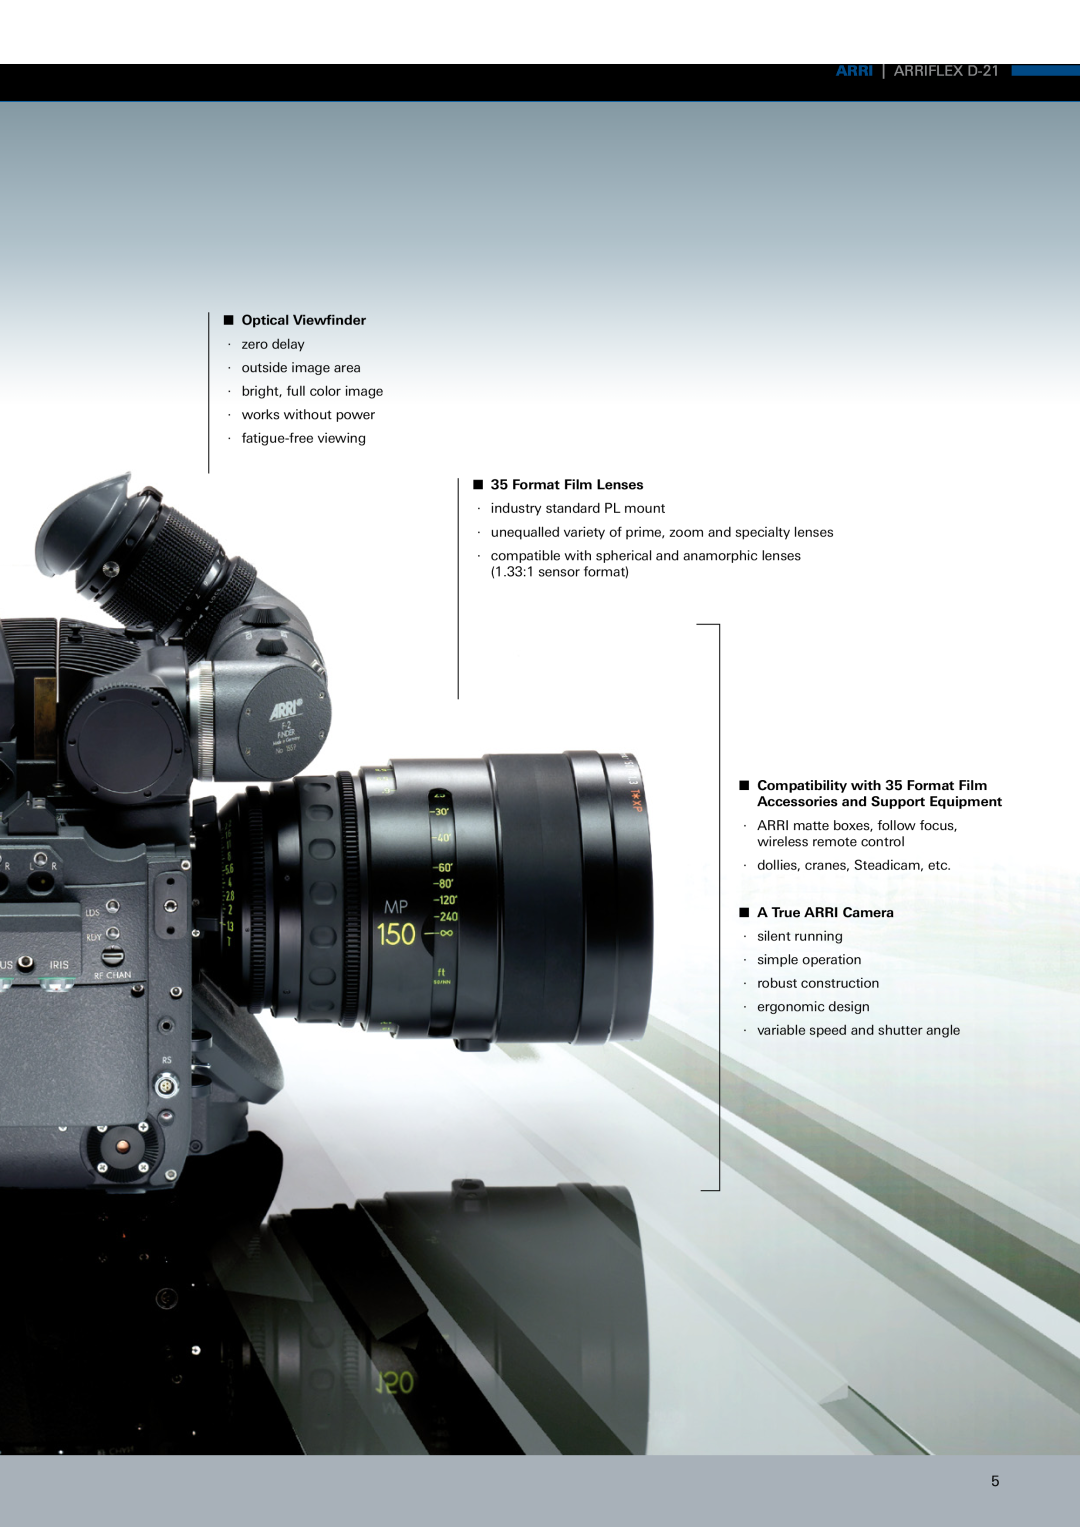 ARRI manual ARRI ARRIFLEX D-21, n Optical Viewfinder · zero delay, n 35 Format Film Lenses, n A True ARRI Camera 